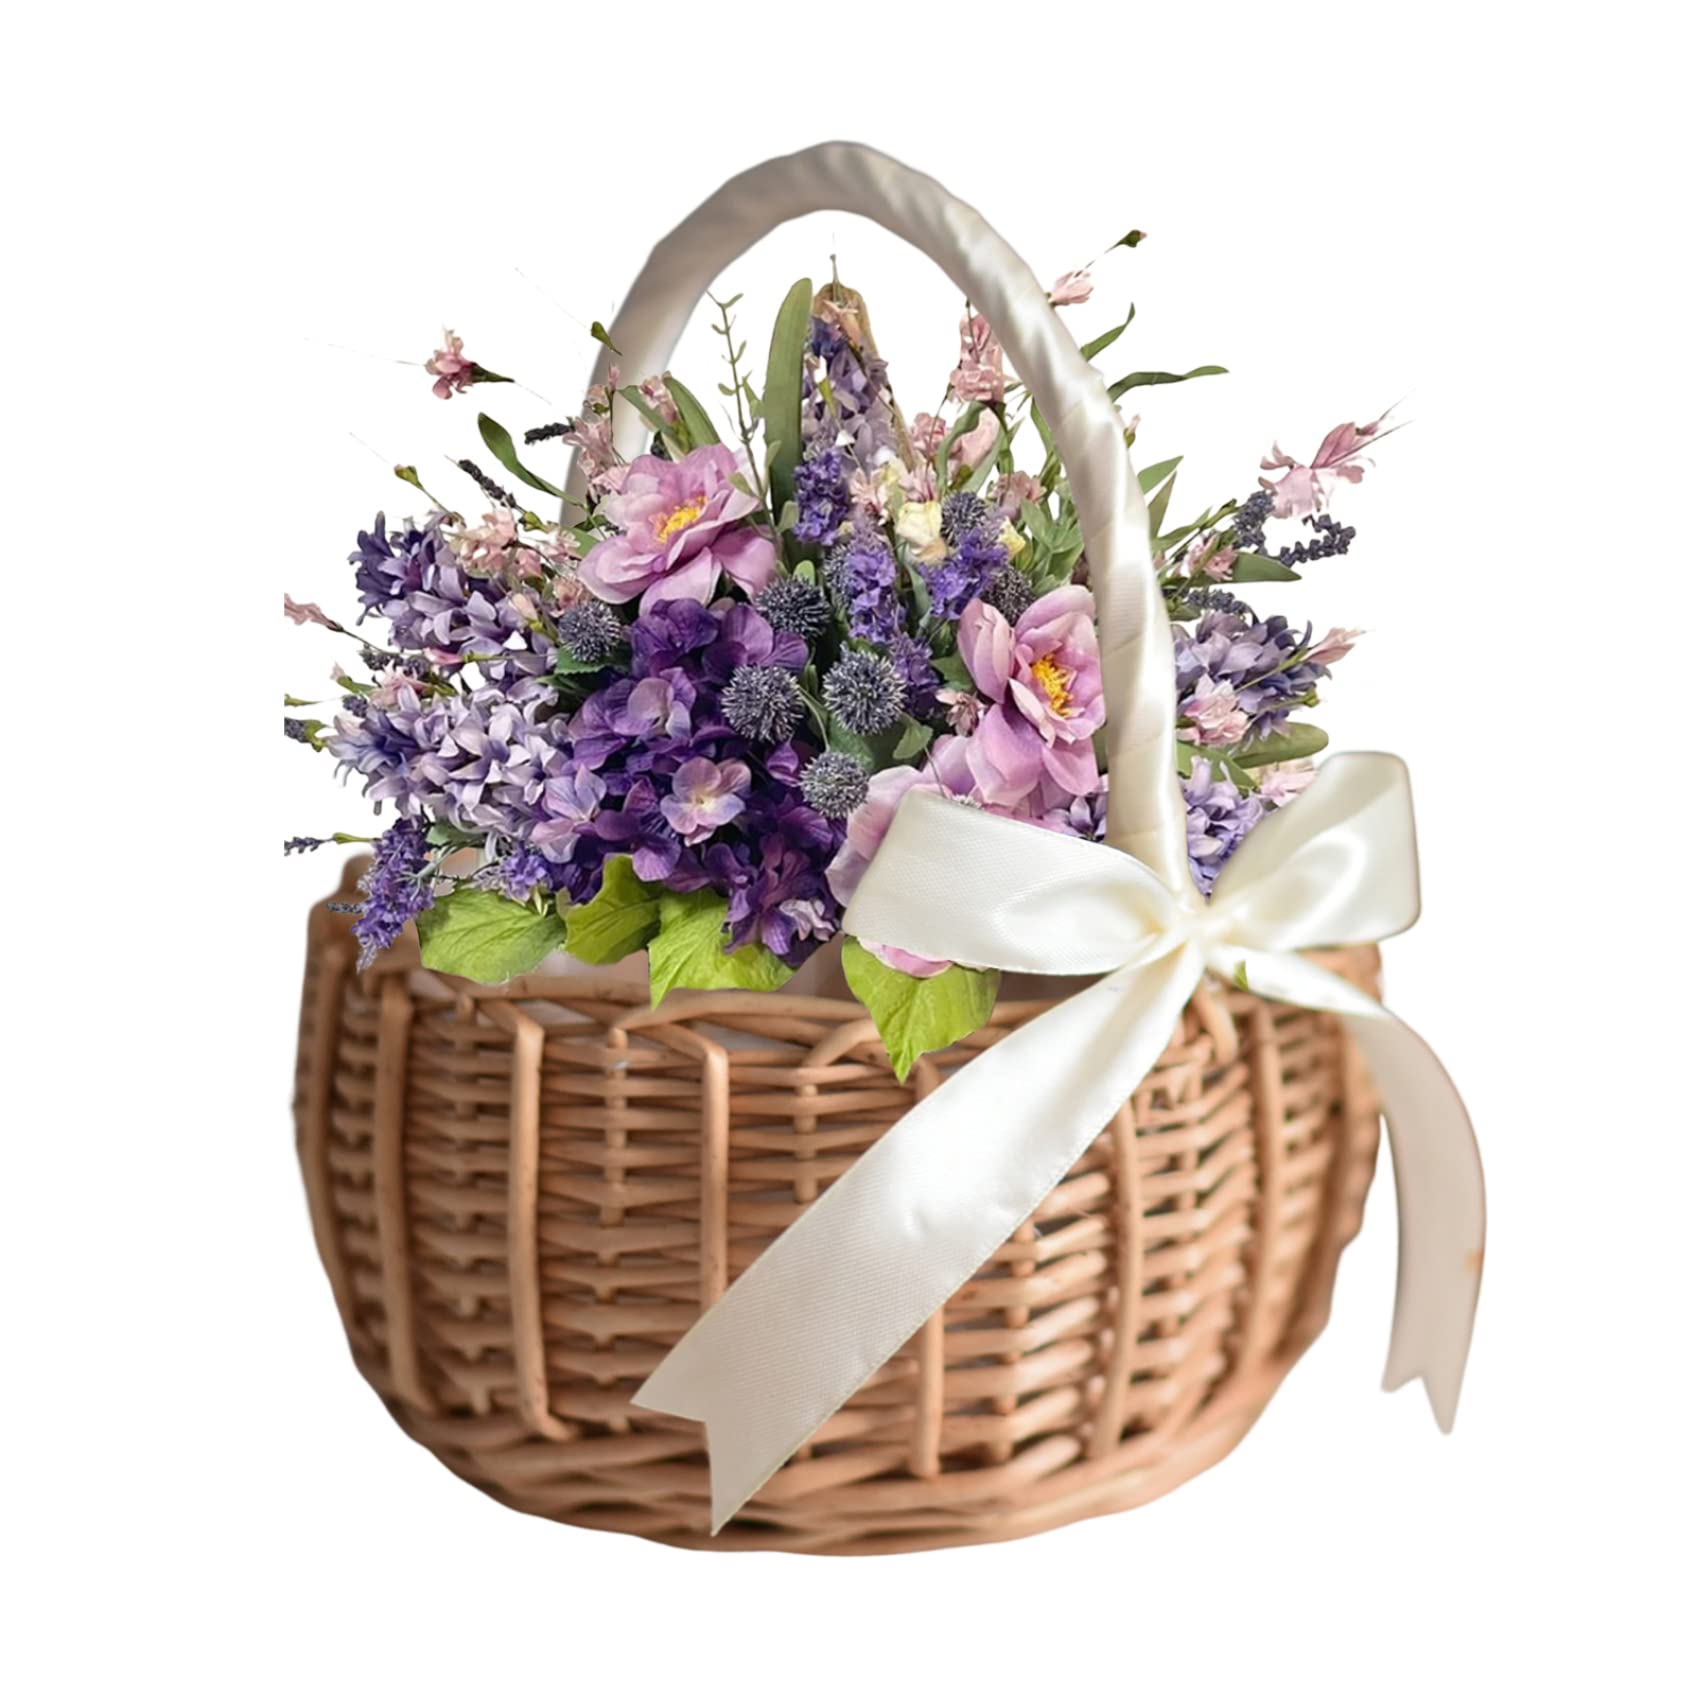 Meyrwoy Wicker Basket,Woven Storage Basket, Flower Girl Basket with Handle Woven Willow Basket Wicker Rattan Flower Basket Candy Storage Basket for Wedding Party Decor White